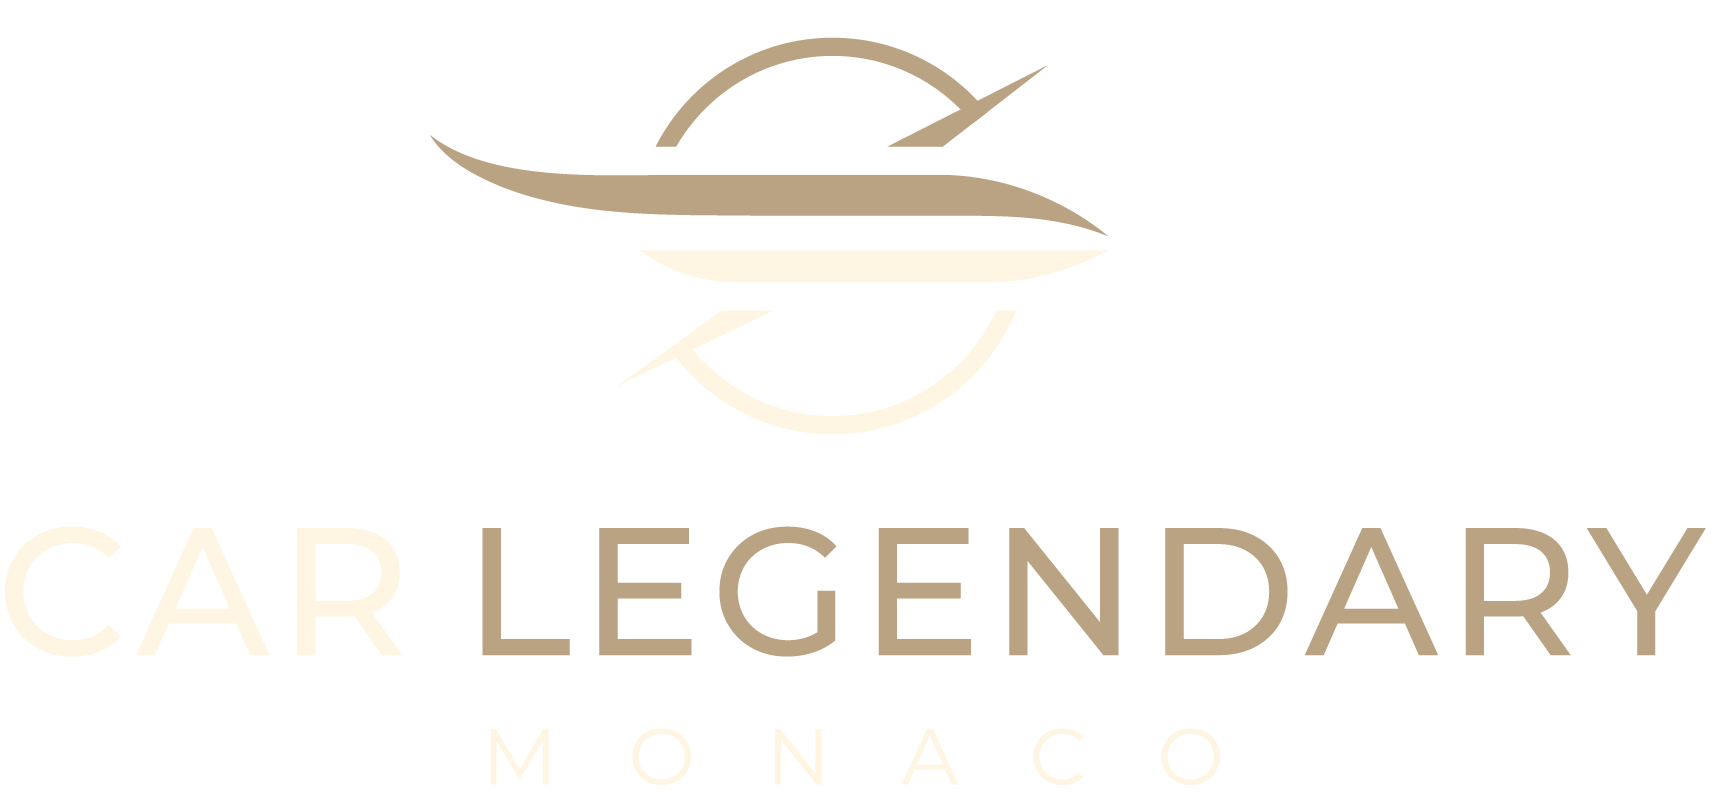 Car Legendary Monaco